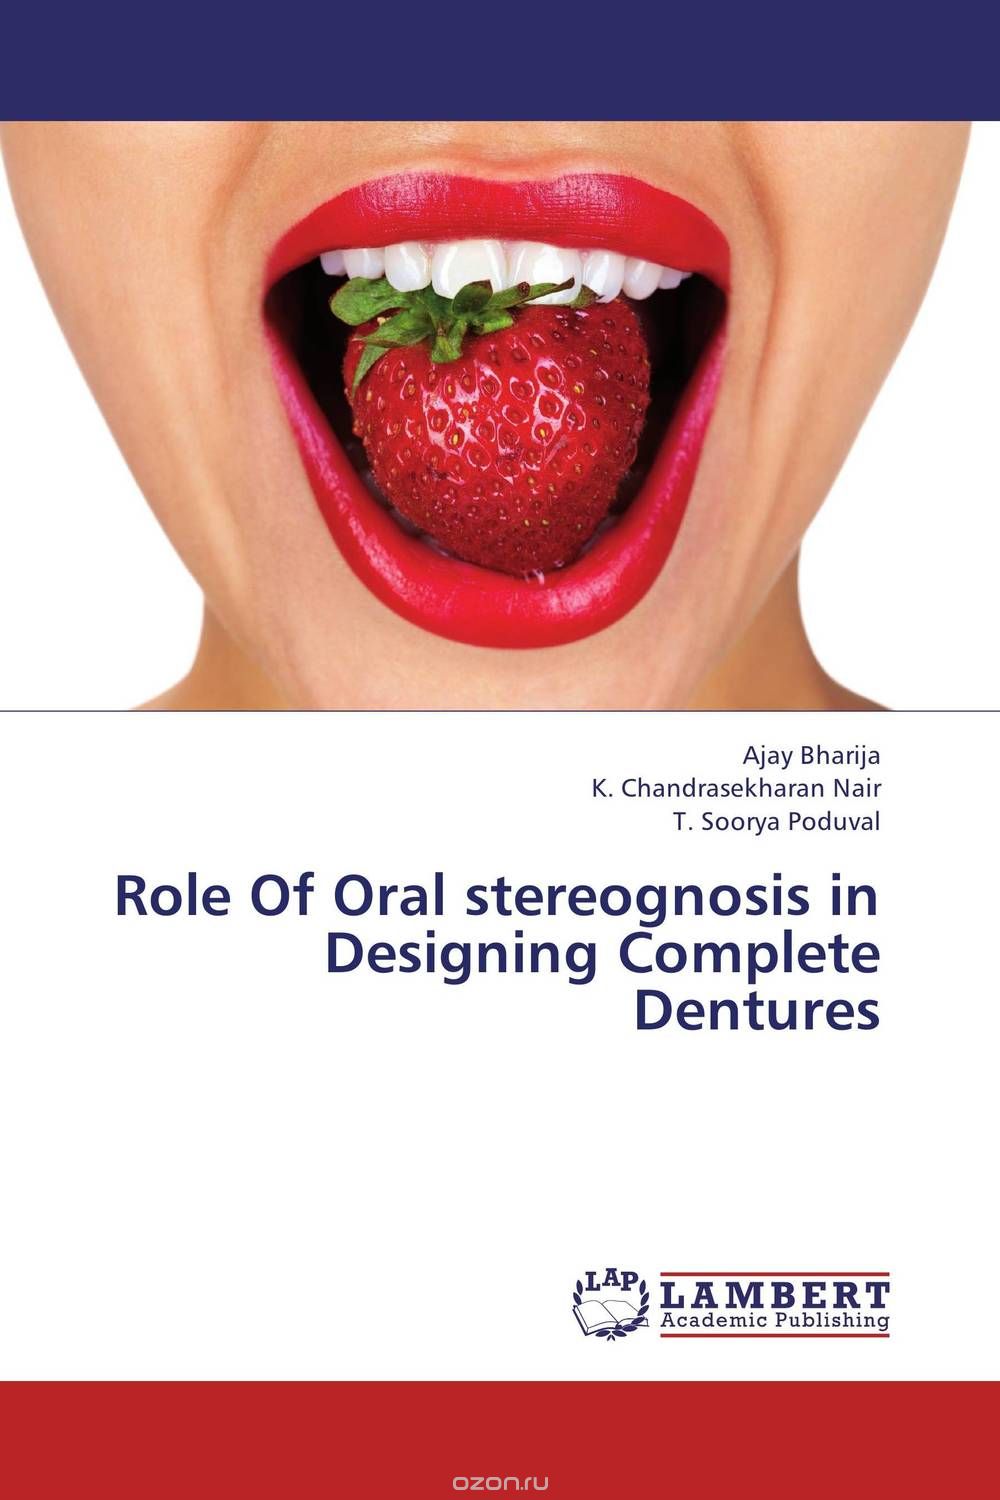 Скачать книгу "Role Of Oral stereognosis in Designing Complete Dentures"